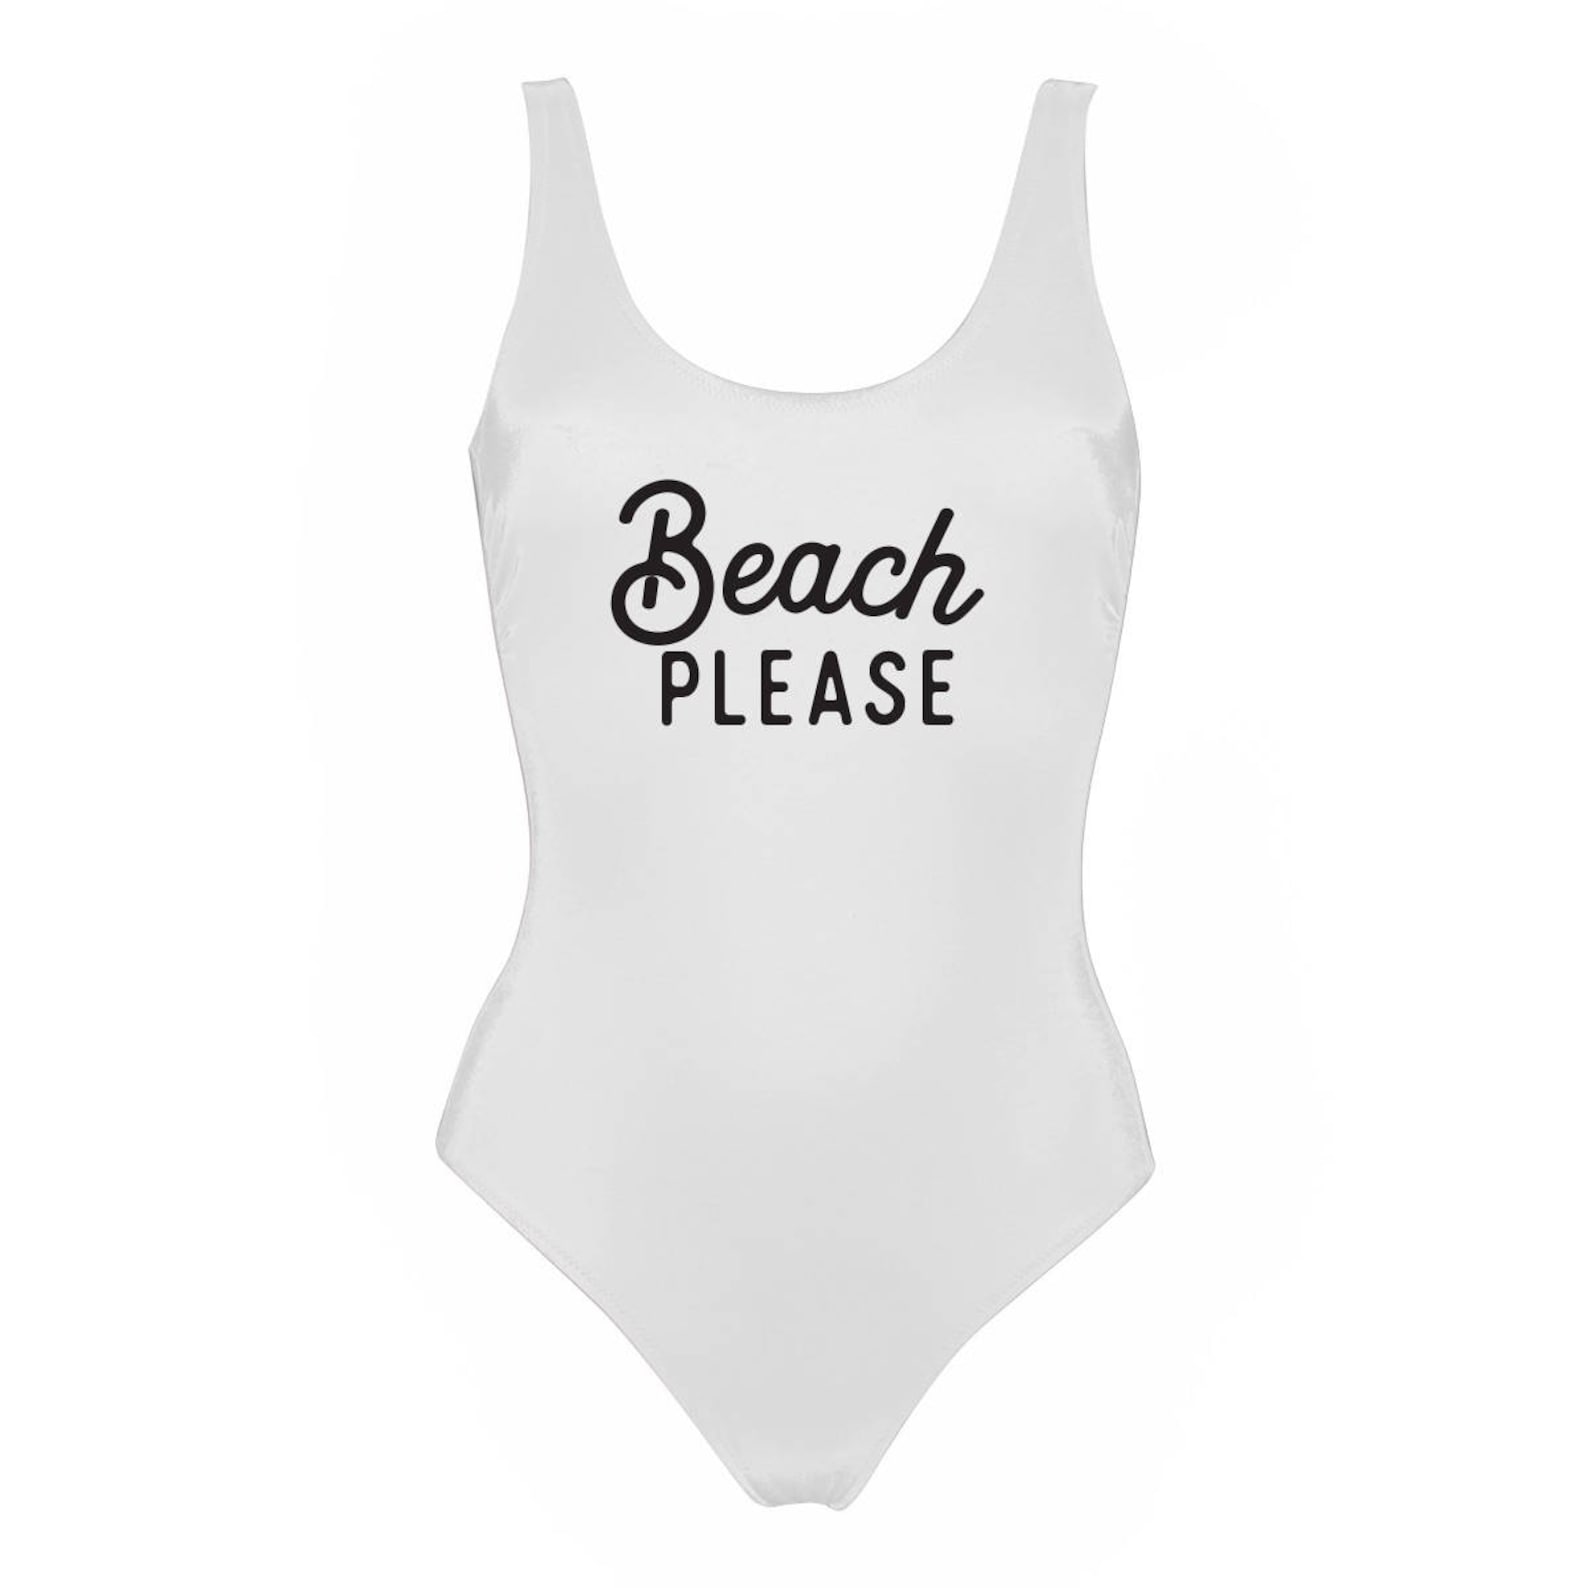 Beach please перевод. Бич плиз